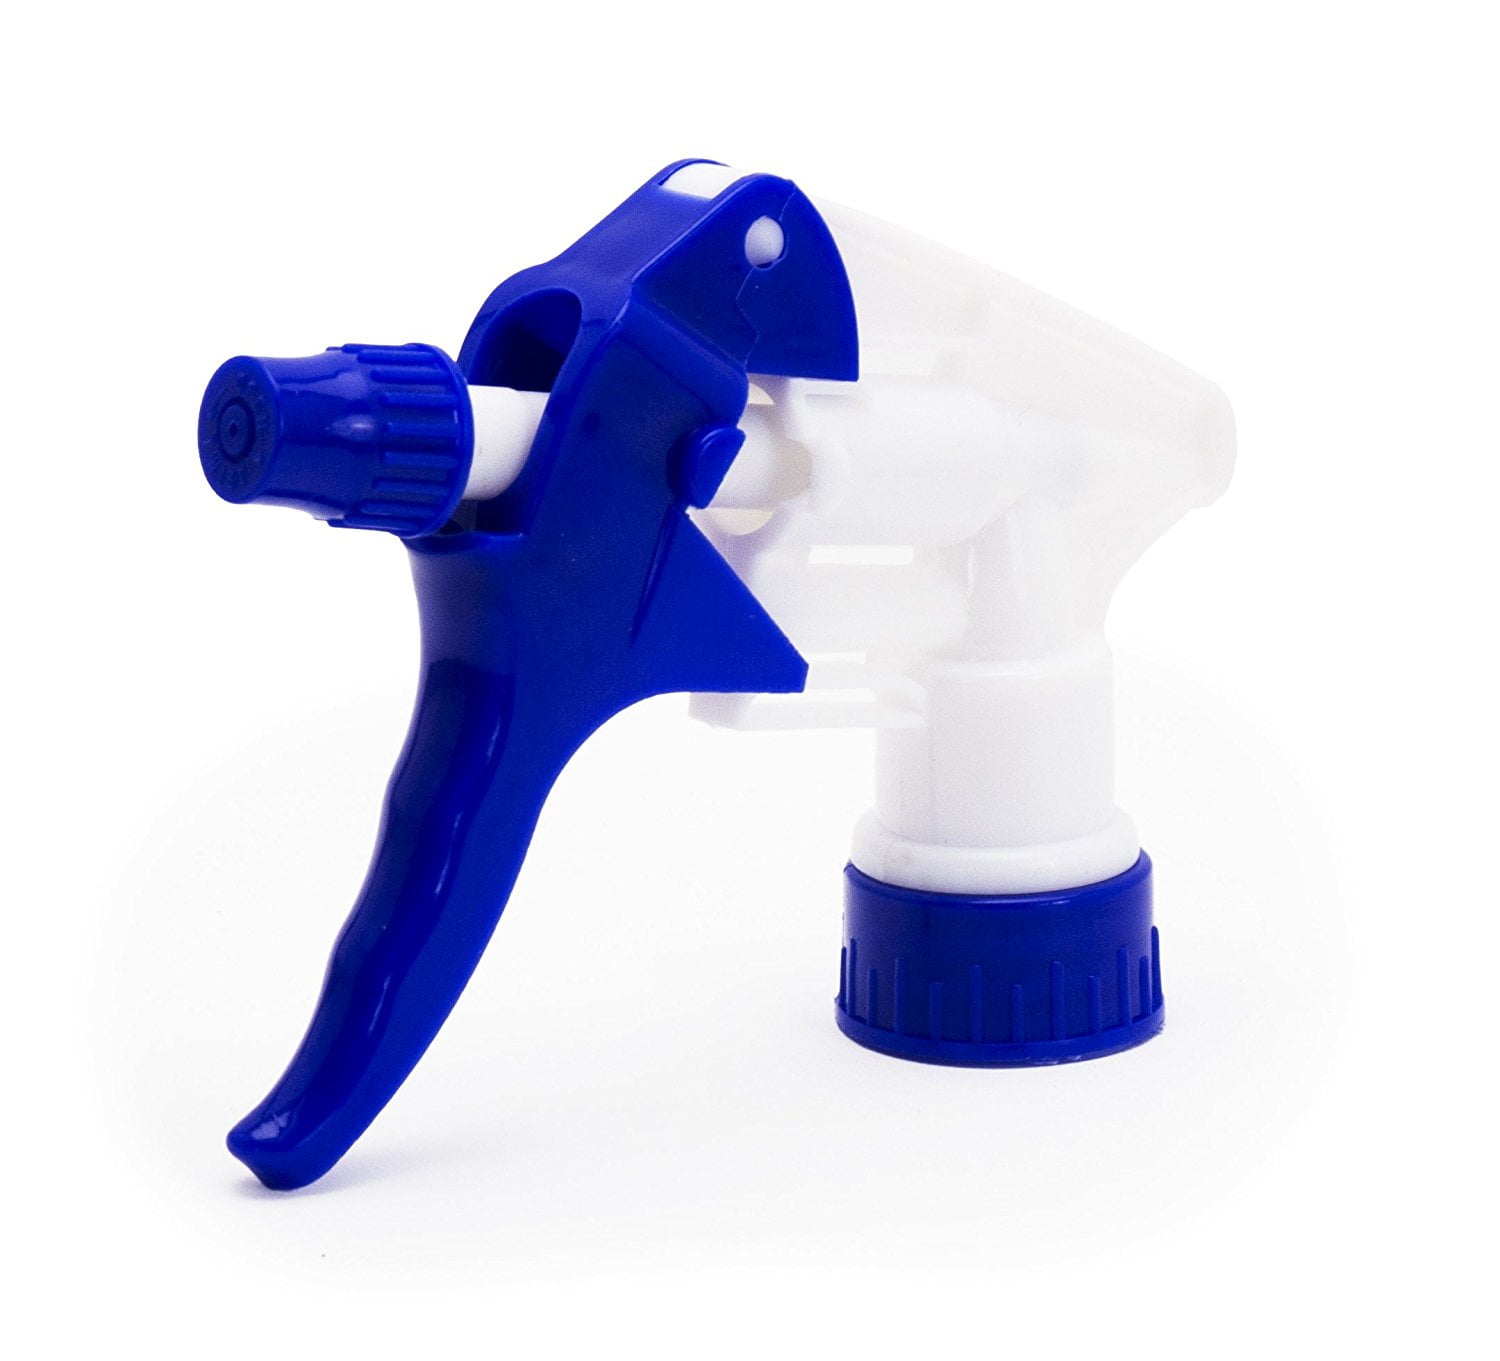 Yardwe 10PCS Spray Bottle Trigger Replacement Spray Bottle Nozzles Spray Stream Sprayer Replacement Trigger Spray Tops Heads 